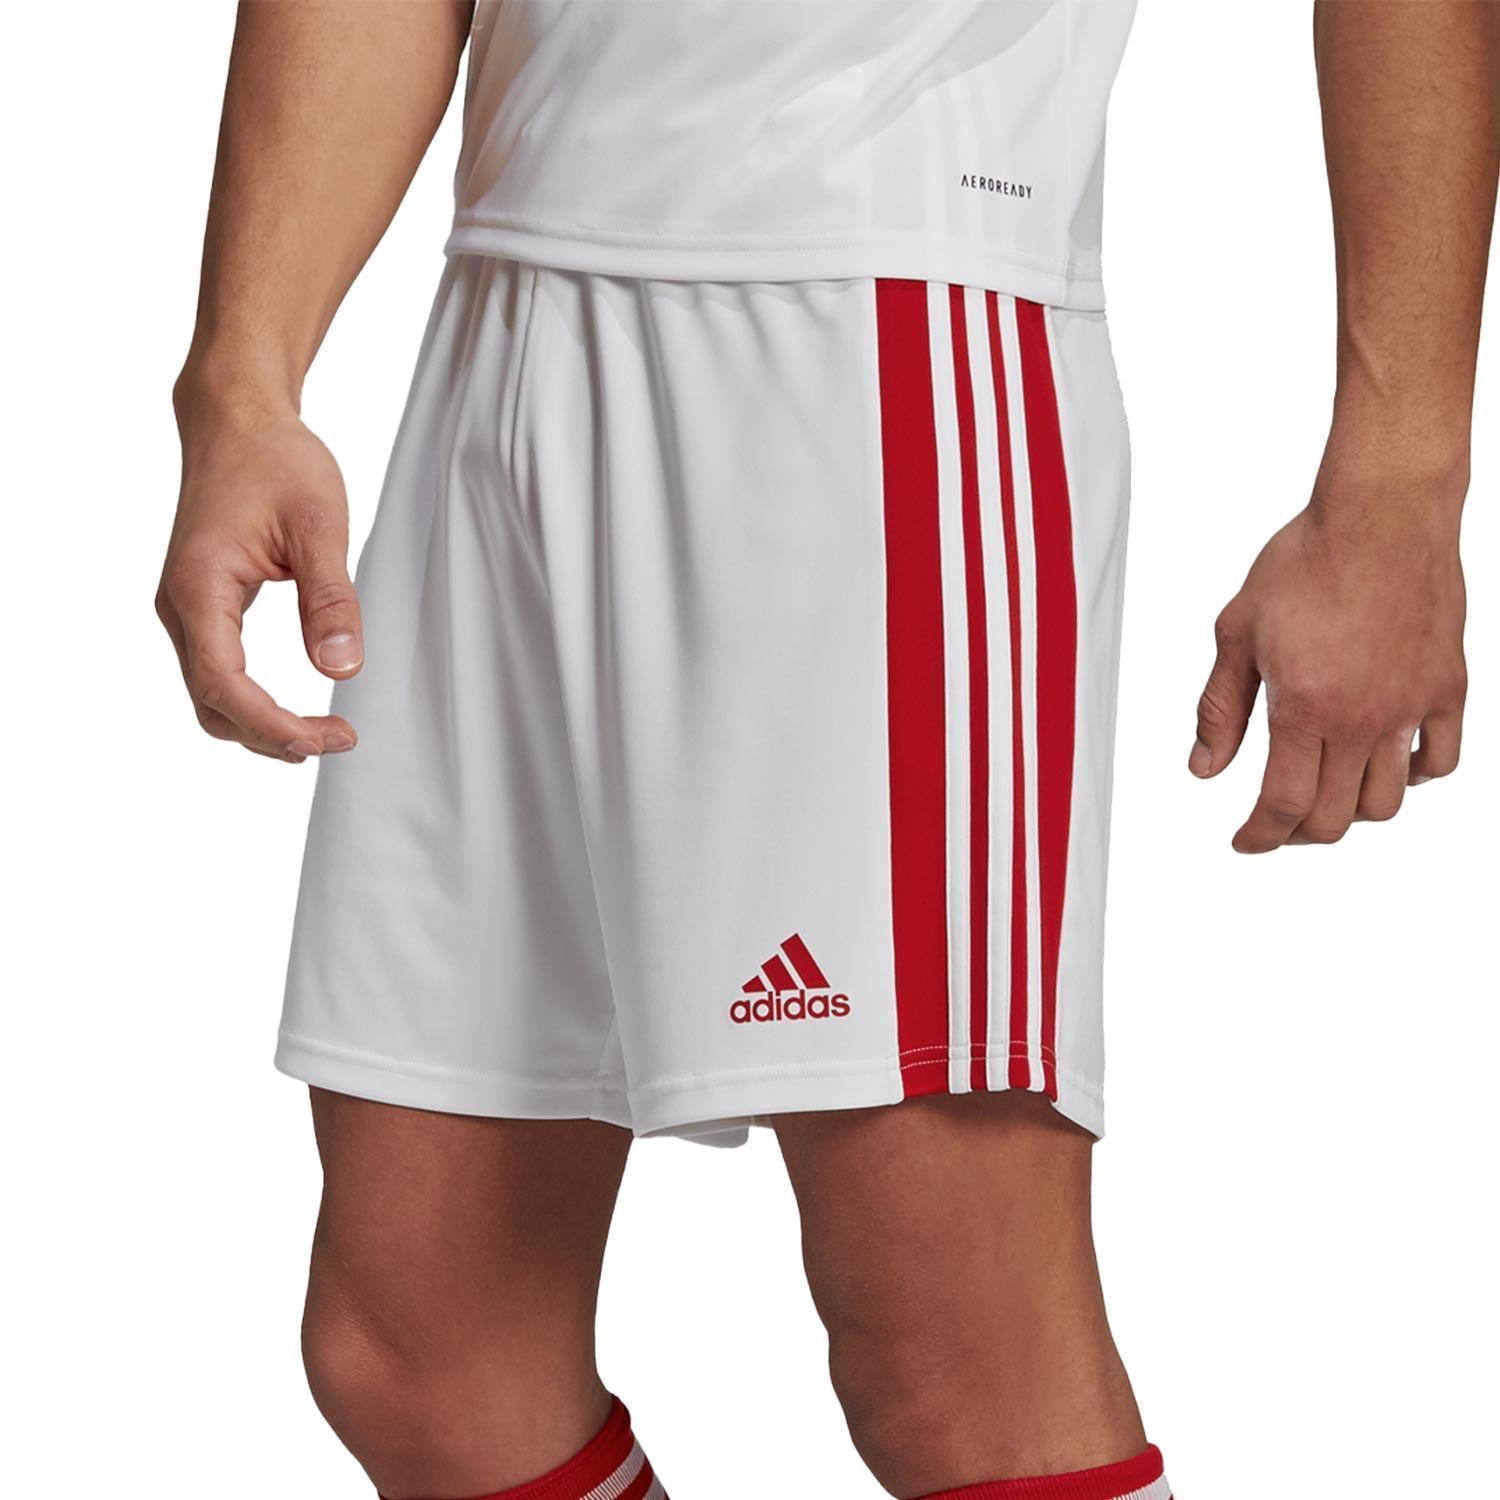 adidas shorts adidas gn5770. da uomo, colore bianco